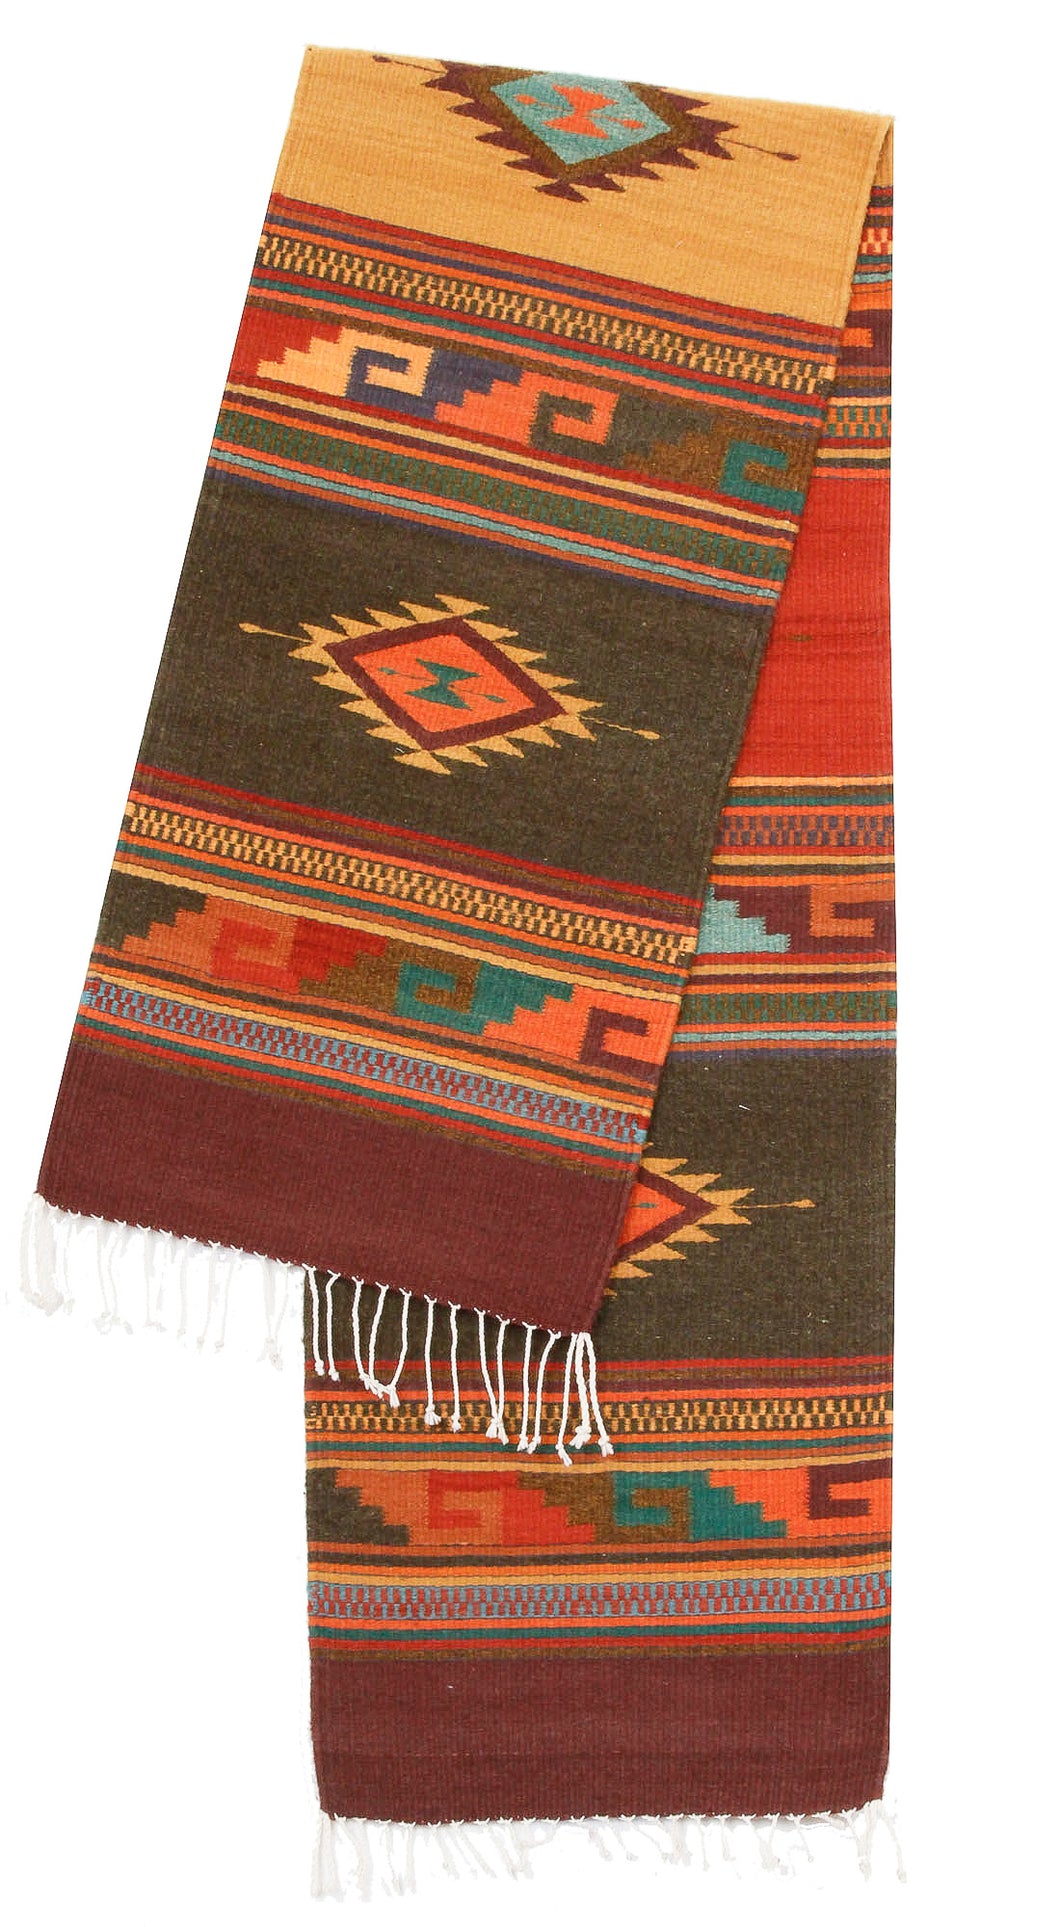 Handwoven Zapotec Indian Table Runner - Midday Manard Dixon Wool Oaxacan Textile